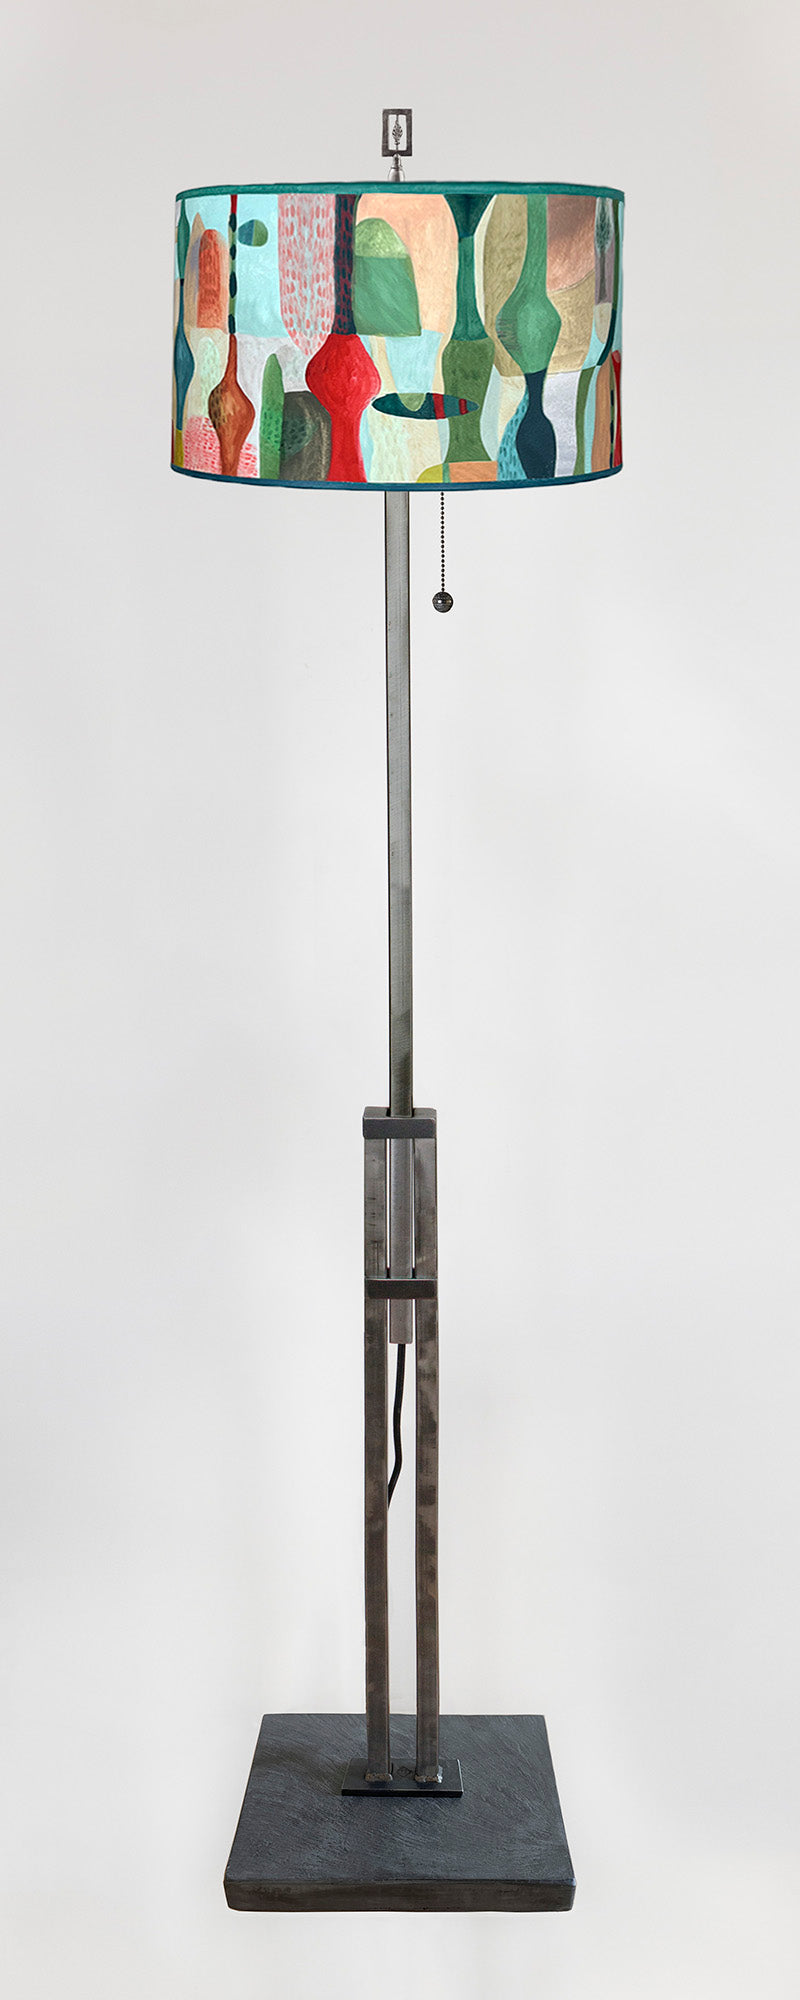 Janna Ugone & Co Floor Lamp Adjustable-Height Steel Floor Lamp with Large Drum Shade in Riviera in Poppy